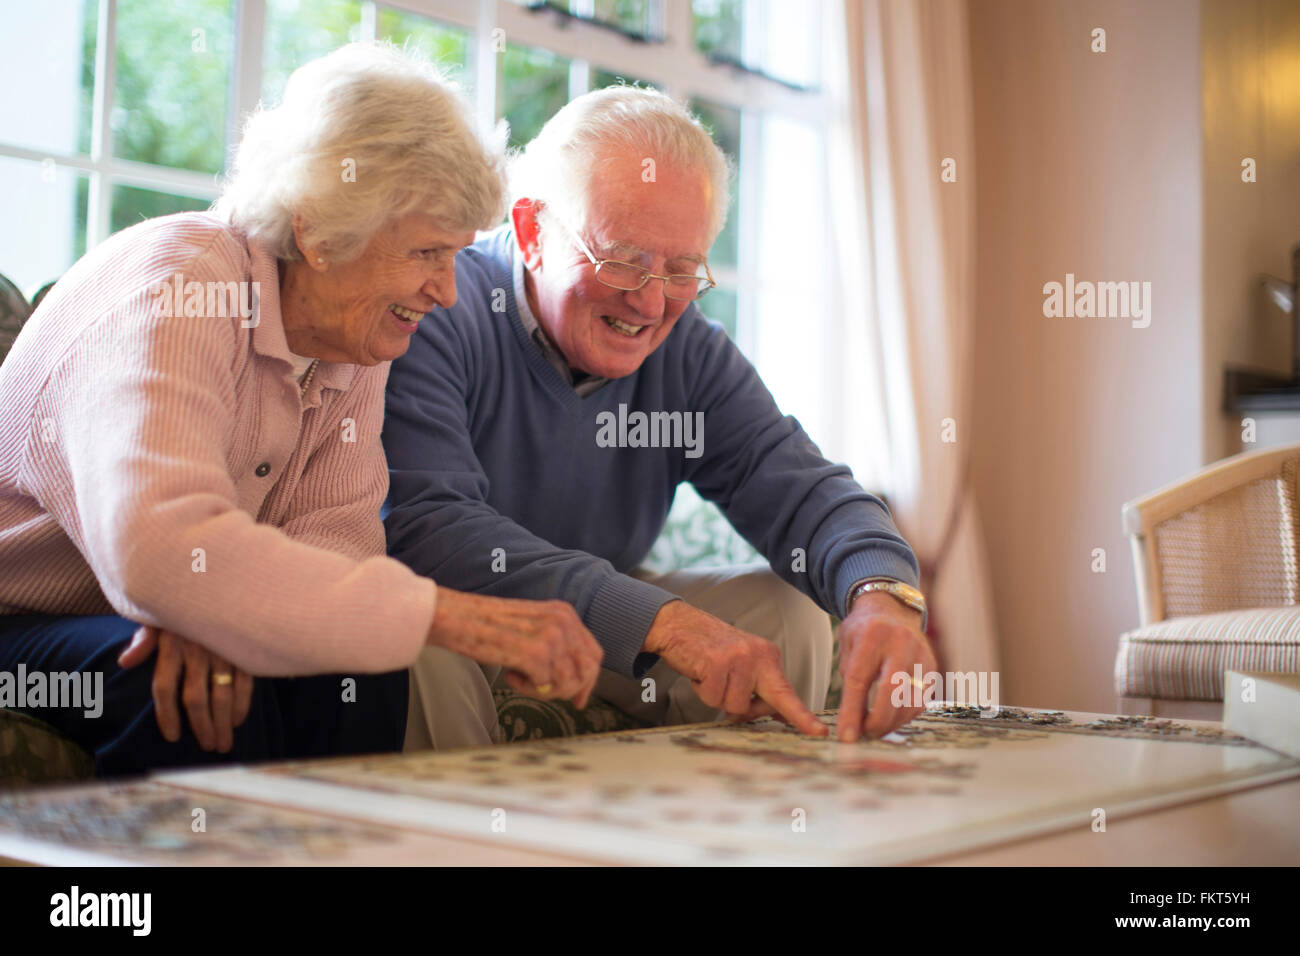 Older couple on sofa solving jigsaw puzzle Stock Photo